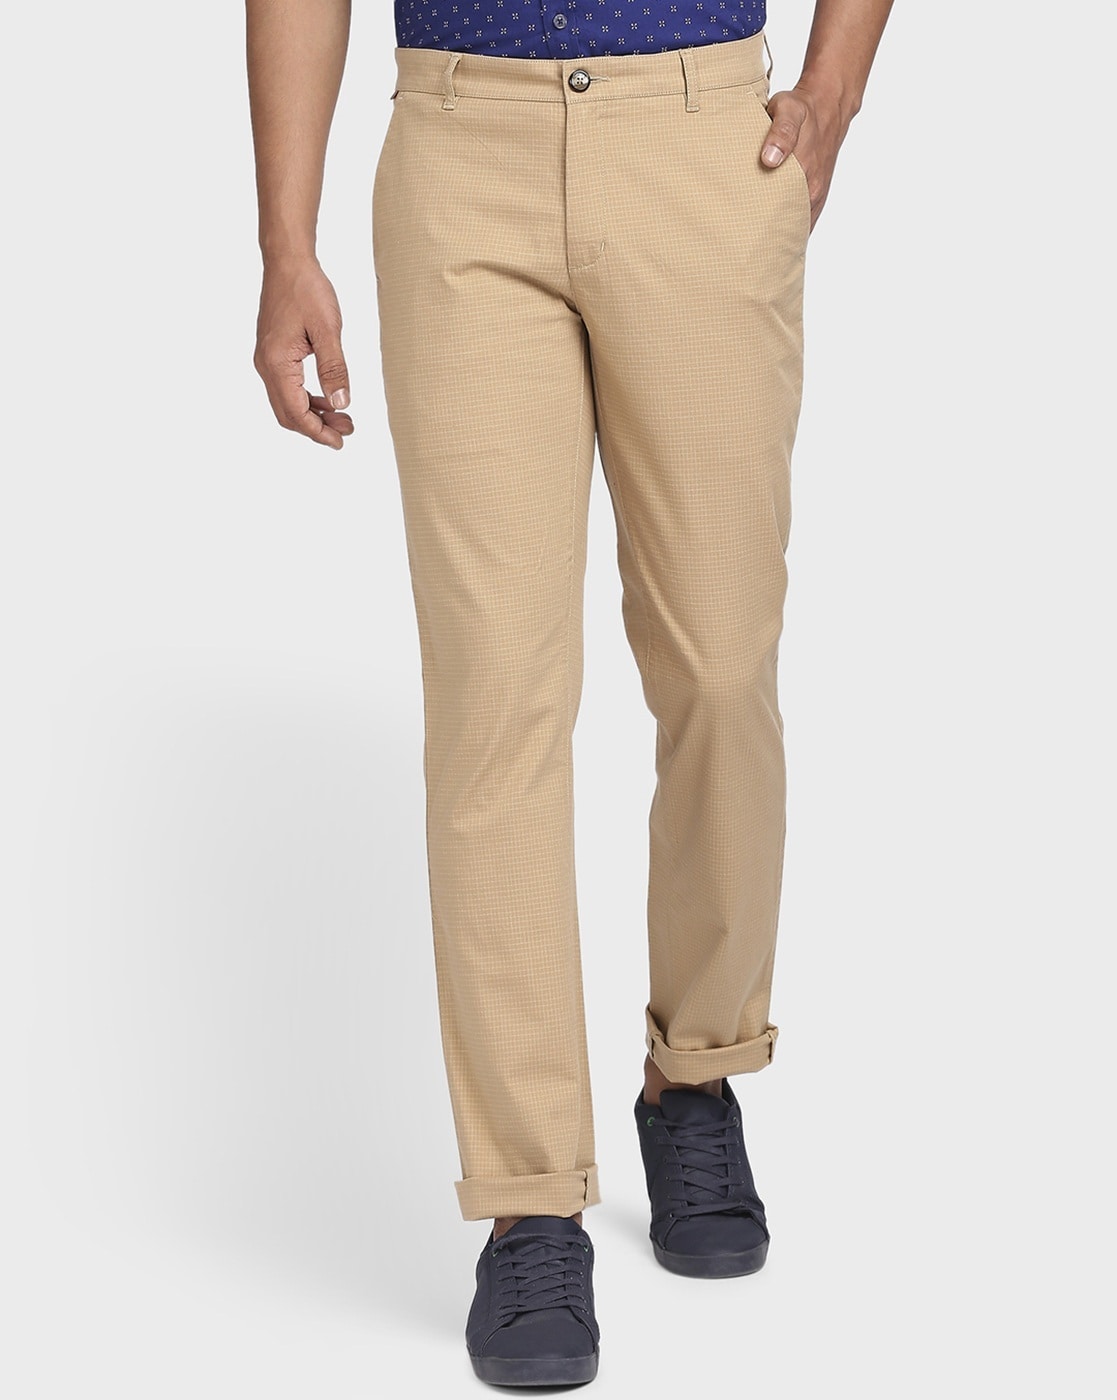 Buy ColorPlus Trousers online  Men  214 products  FASHIOLAin